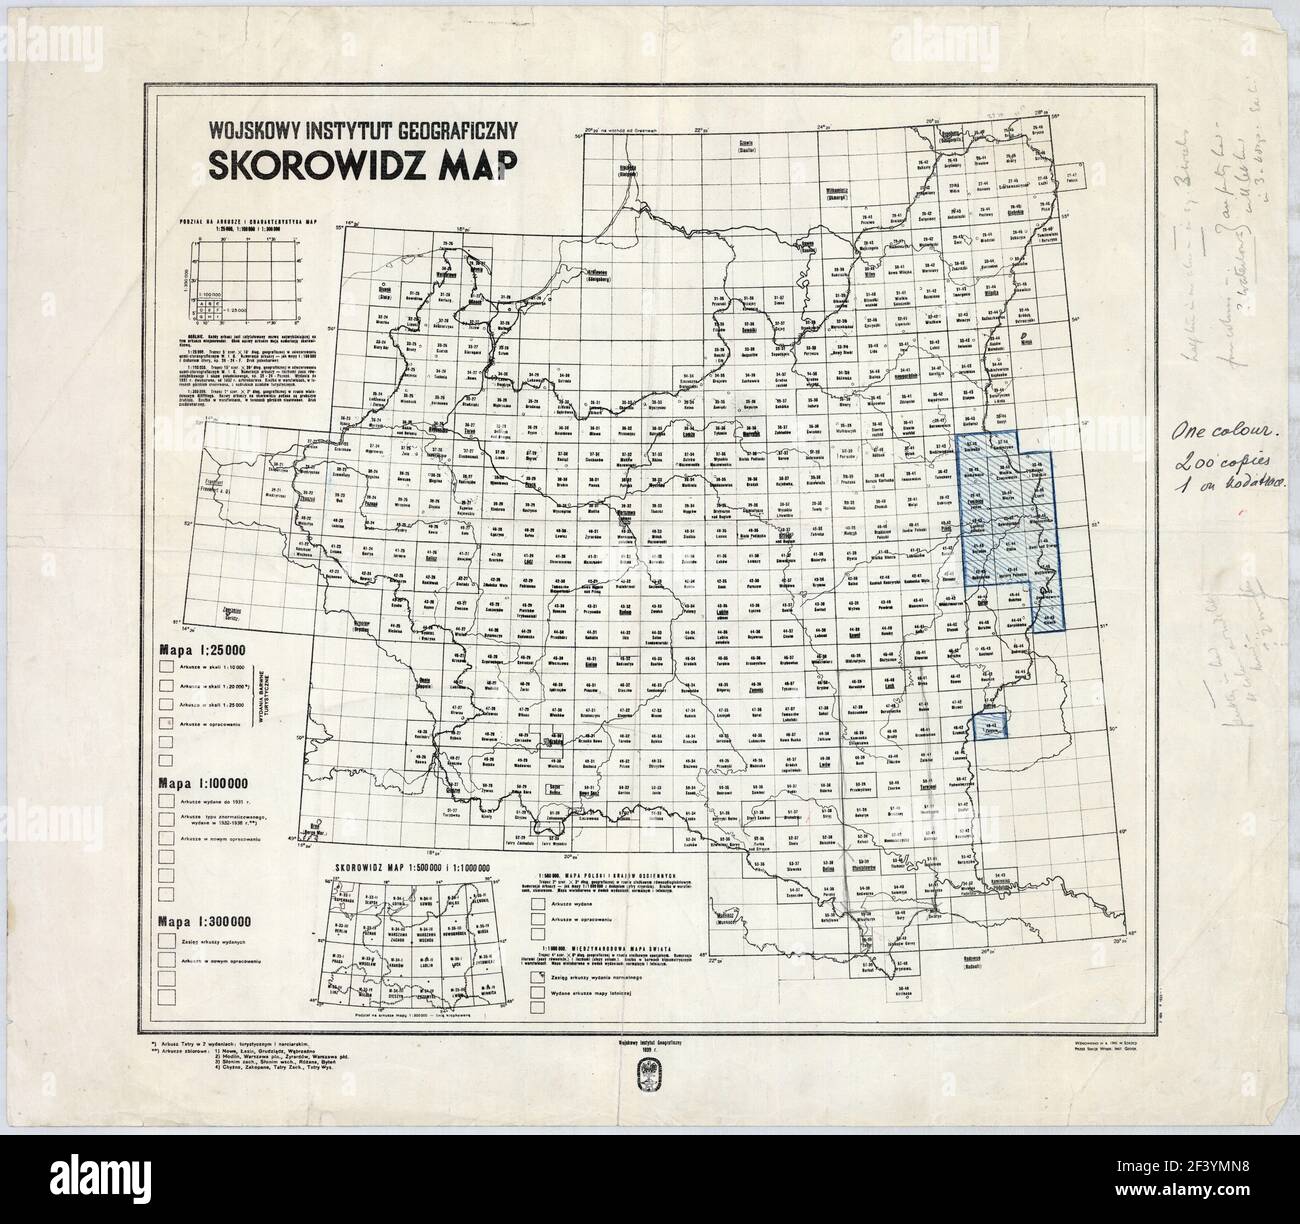 SKOROWIDZ MAP 1941 Stock Photo